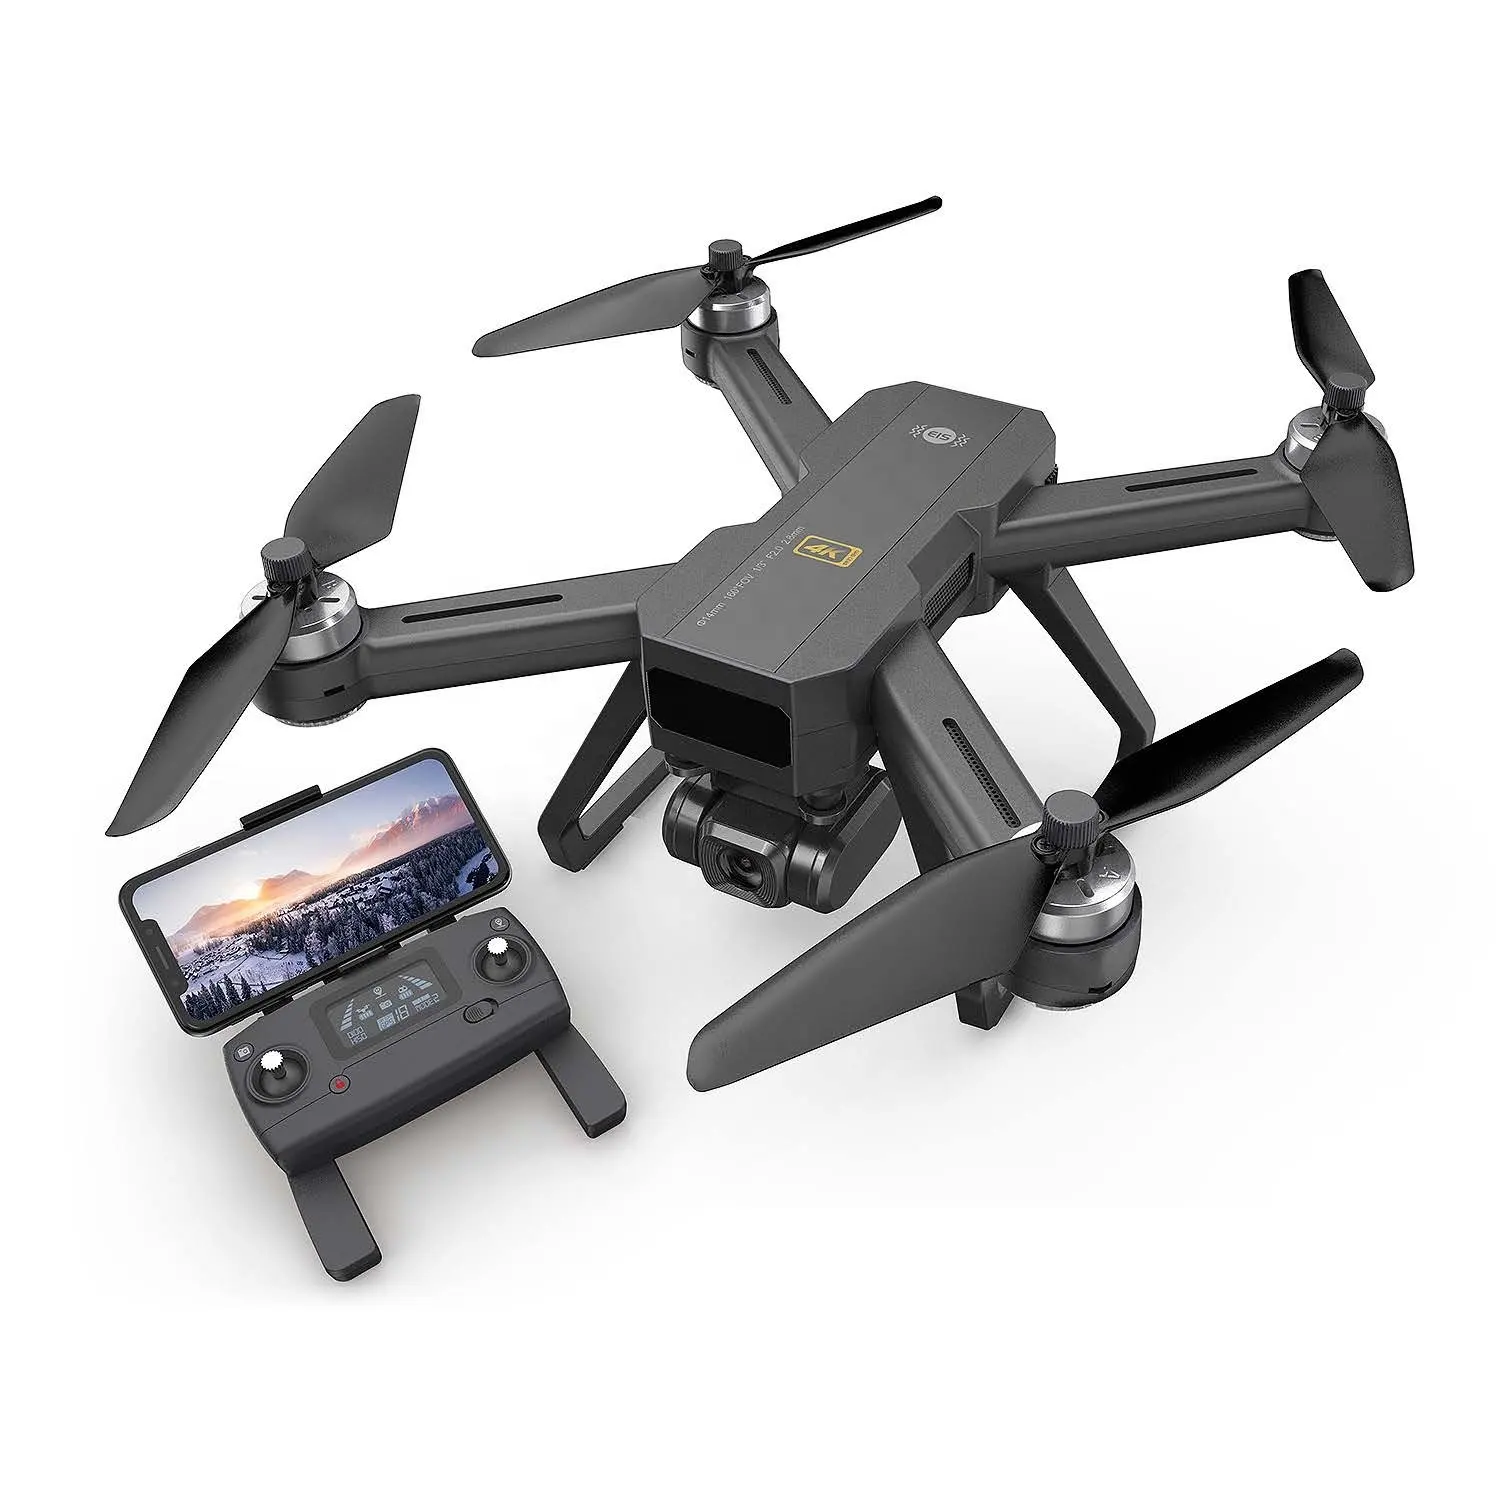 NEW 50X digital zoom camera drone MJX Bugs 20 EIS GPS Drone quadcopter 4K video camera mjx B20 EIS drone